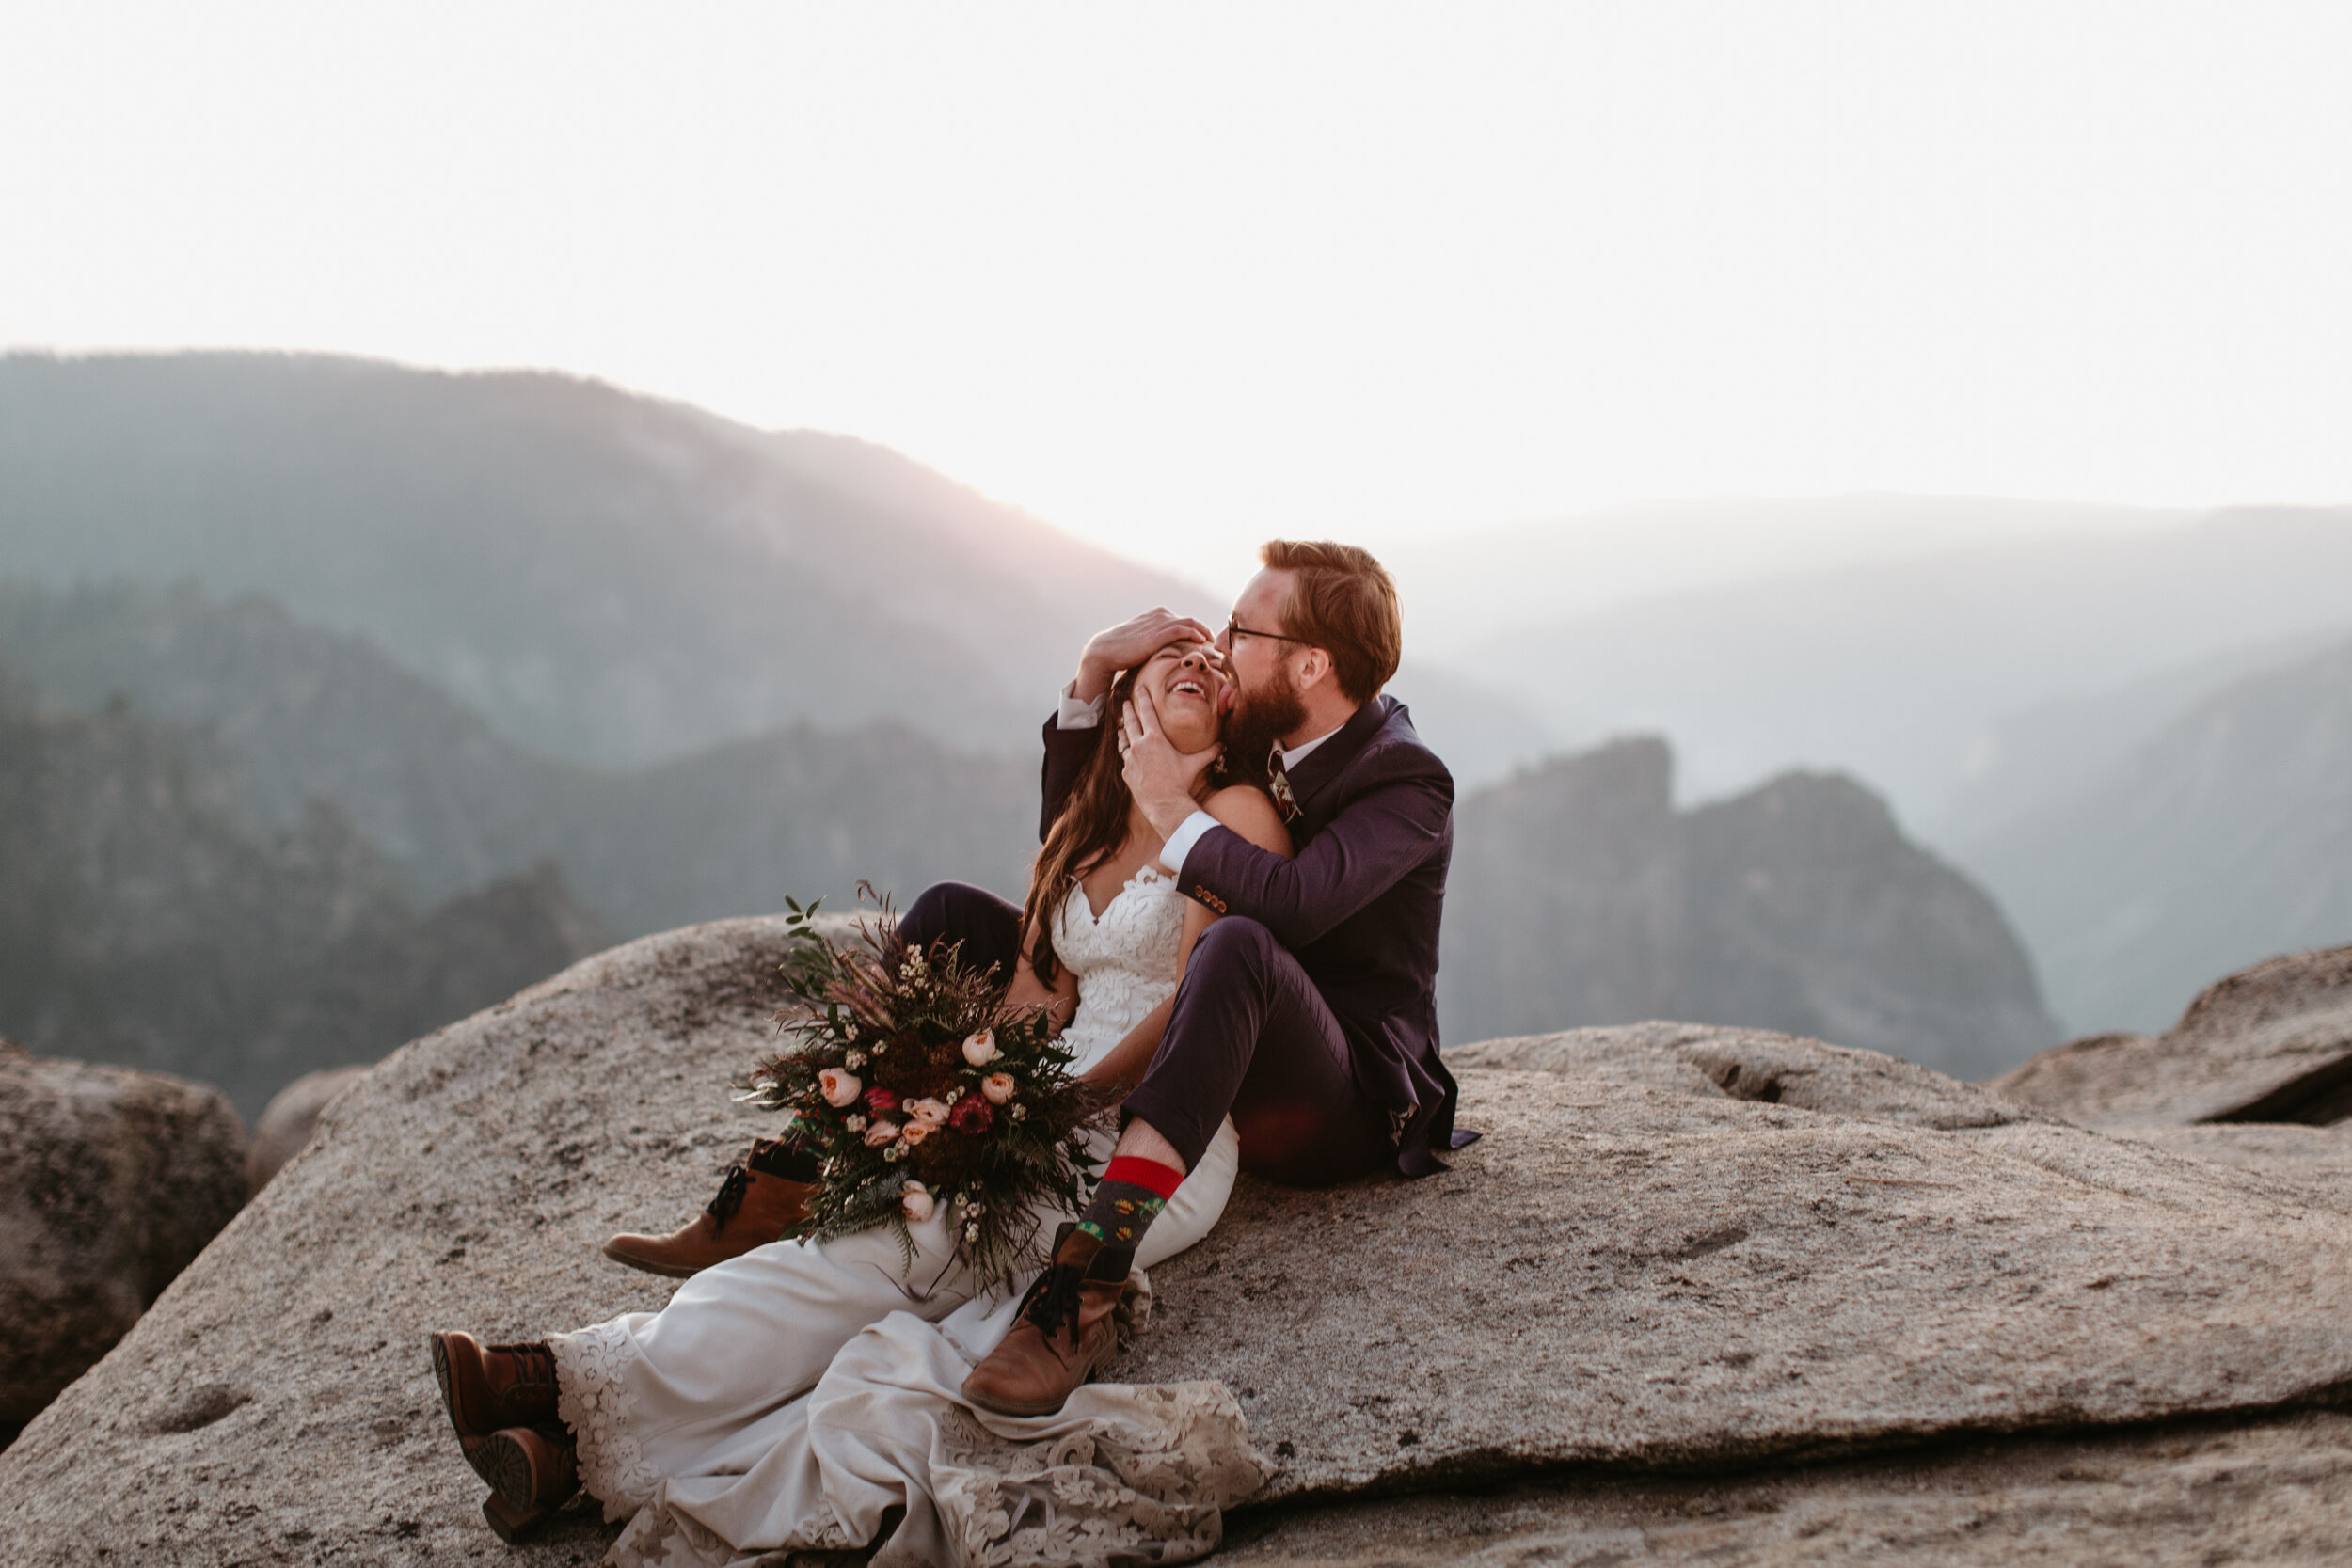 Nicole-Daacke-Photography-yosemite-national-park-elopement-photography-adventure-elopement-in-yosemite-taft-point-sunset-elopement-photographs-california-intimate-destination-wedding-in-yosemite-national-park-7178.jpg